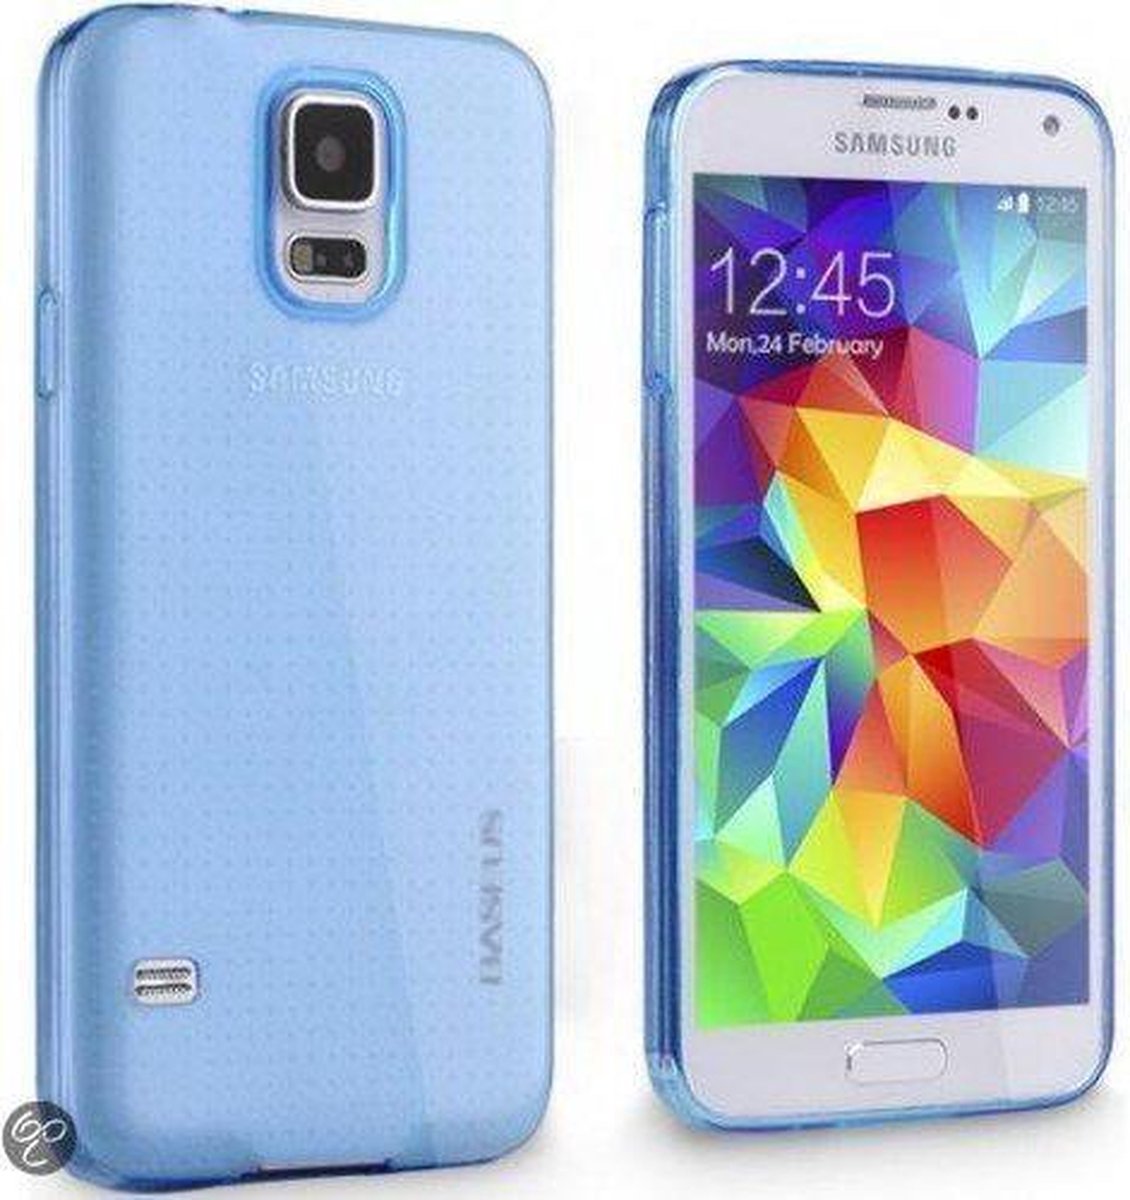 Baseus Air Case Cover Hoesje voor Samsung Galaxy S5 blauw